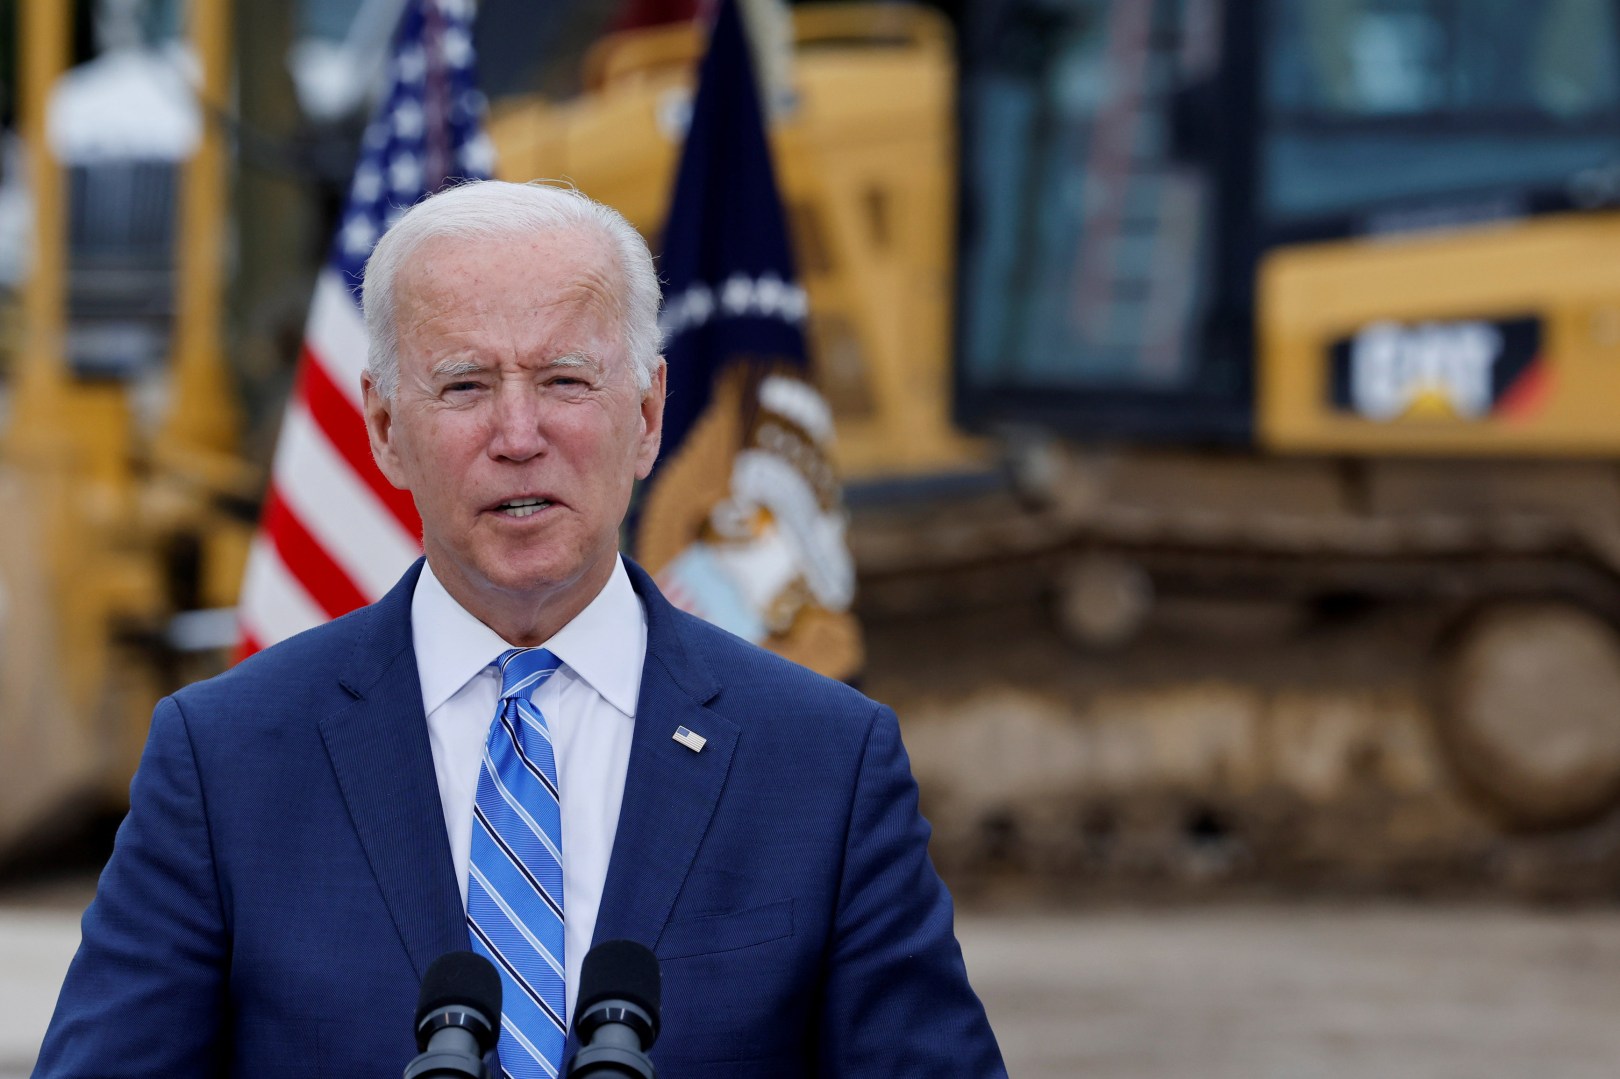 President Biden traveled to Michigan to push his economic agenda.